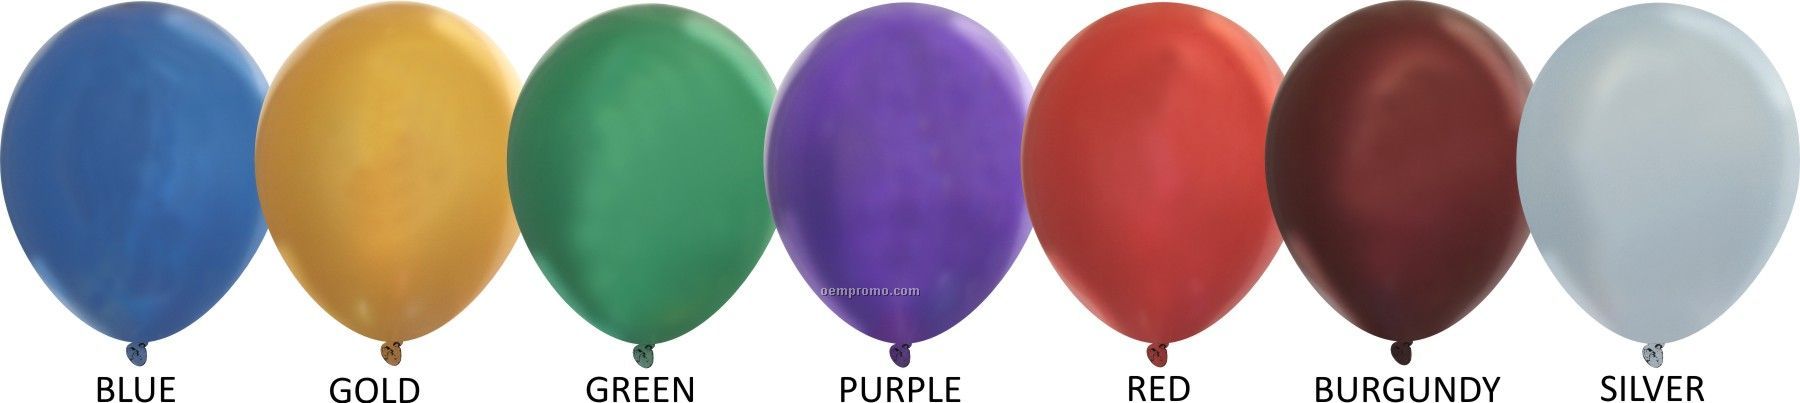 Unimprinted Metallic Latex Balloons (11